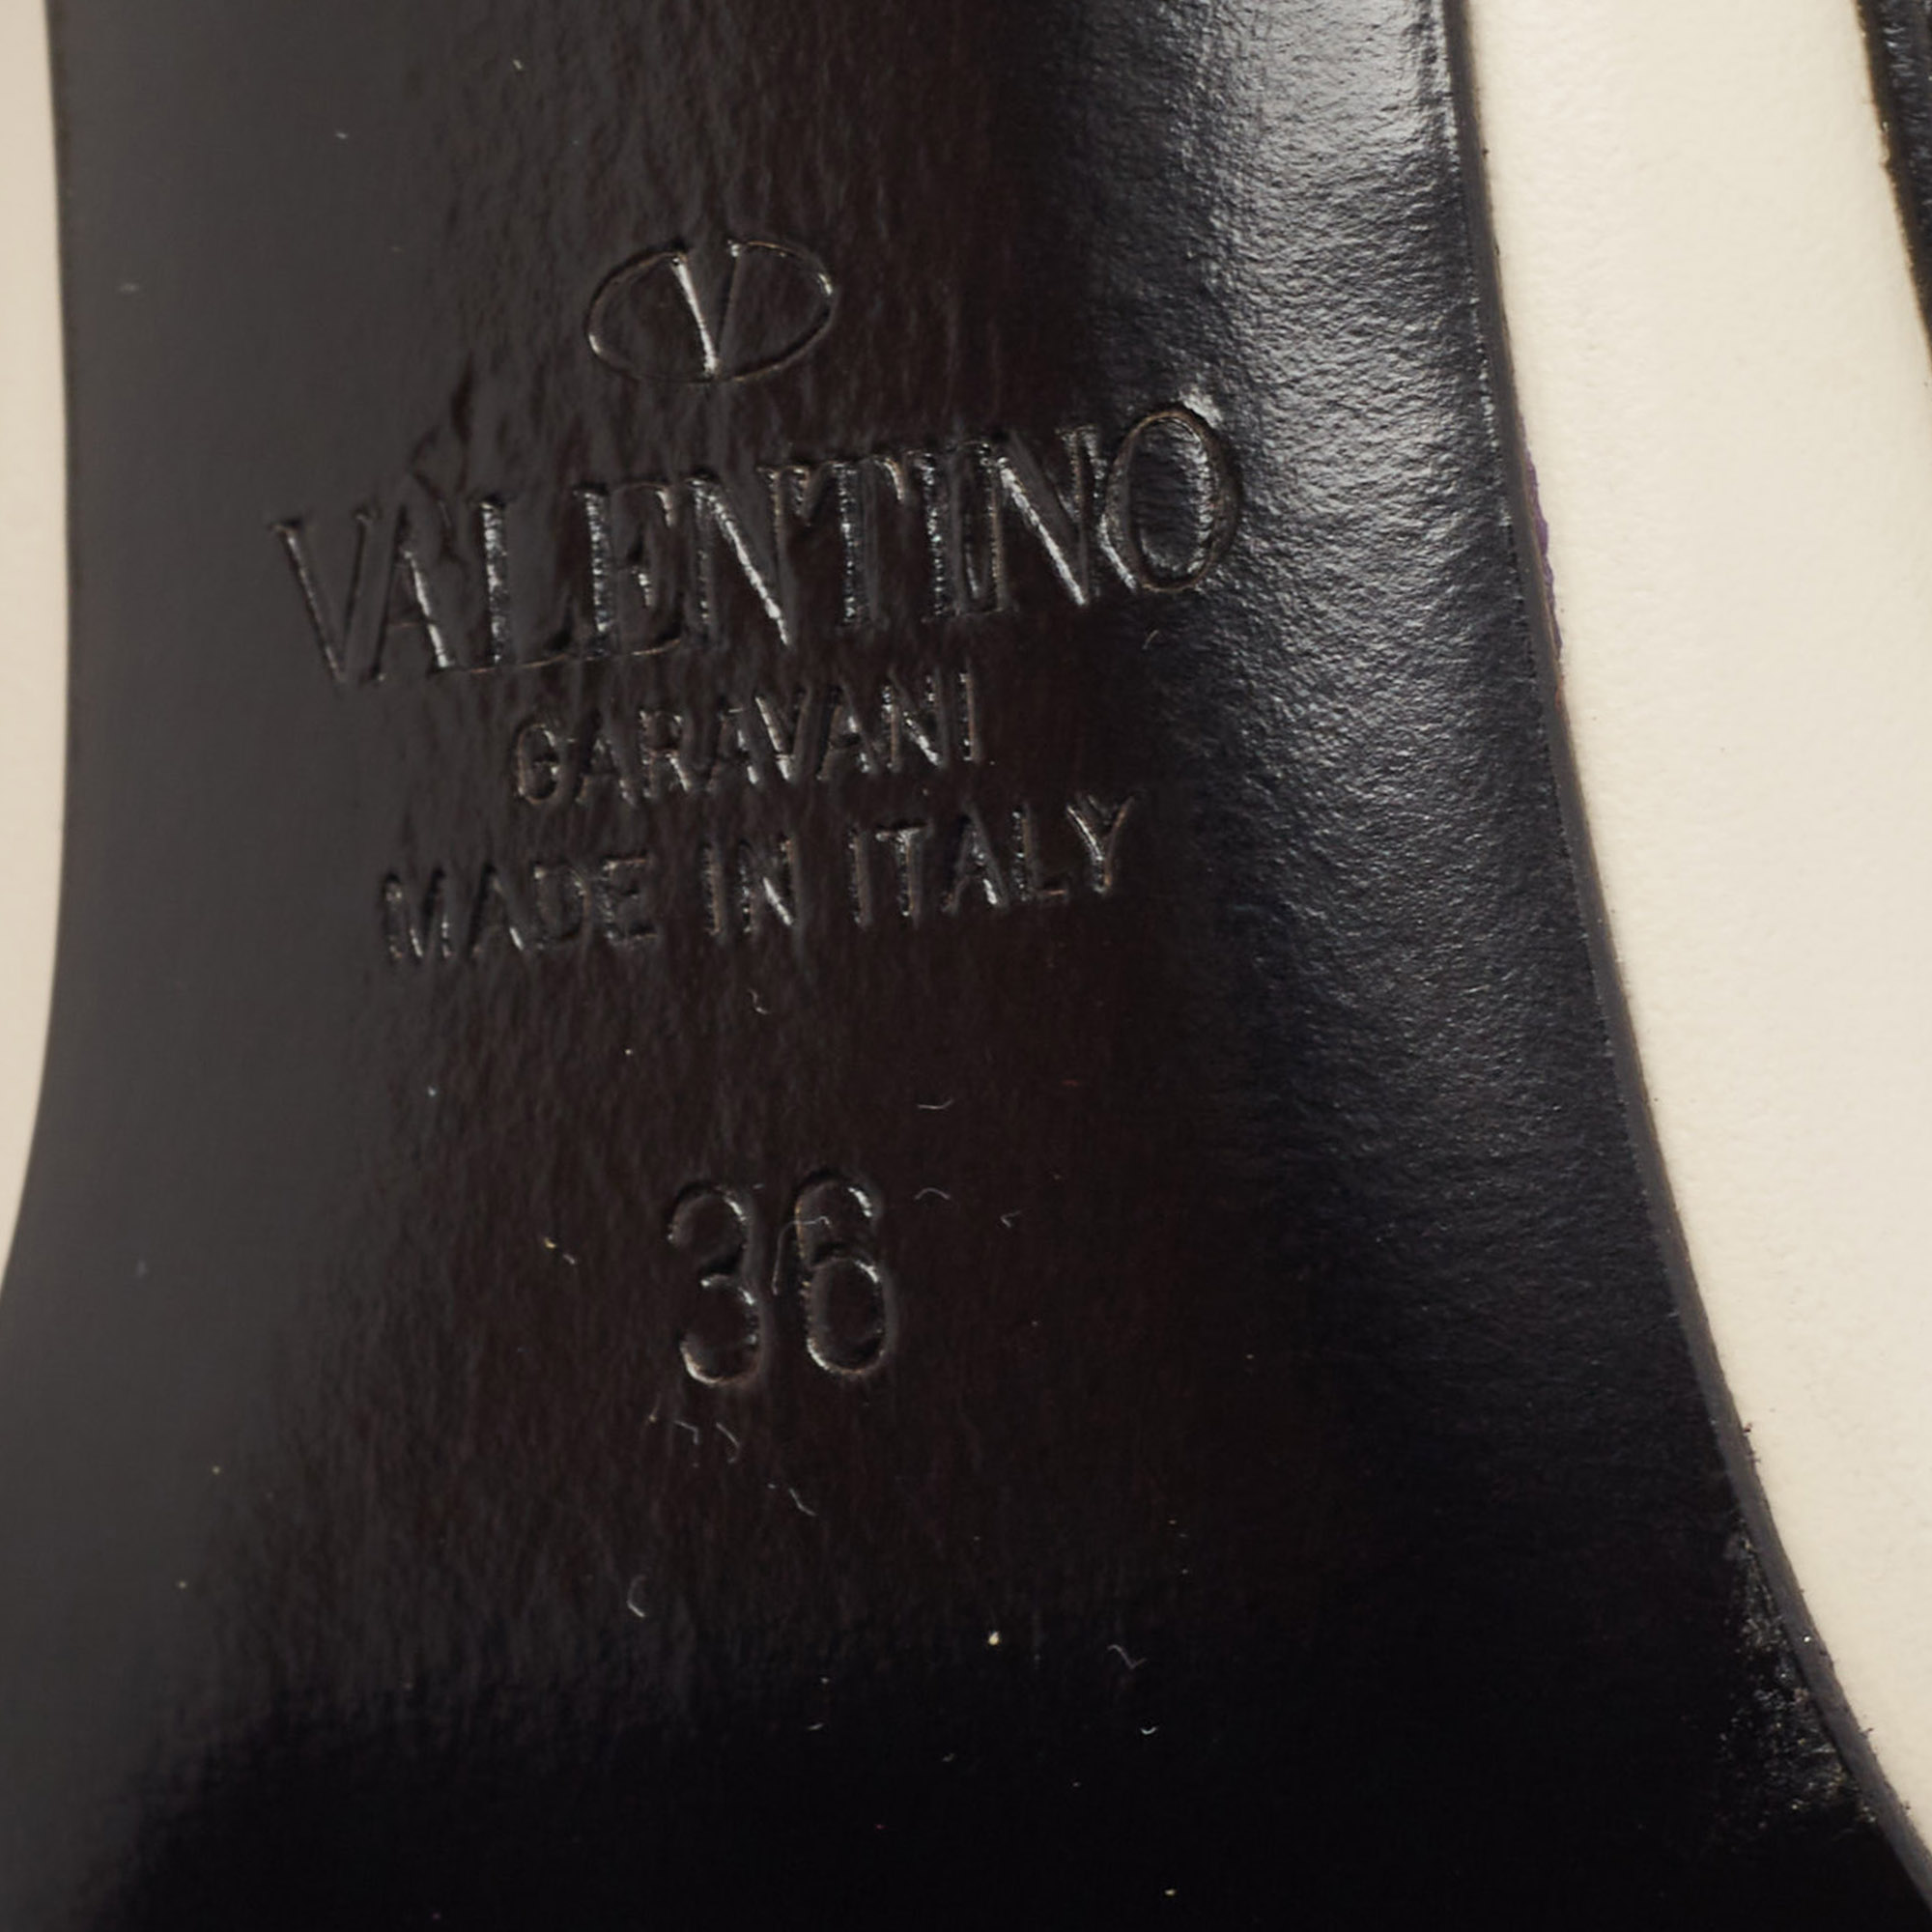 Valentino White/Black Leather Rockstud Ankle Strap Pumps Size 36